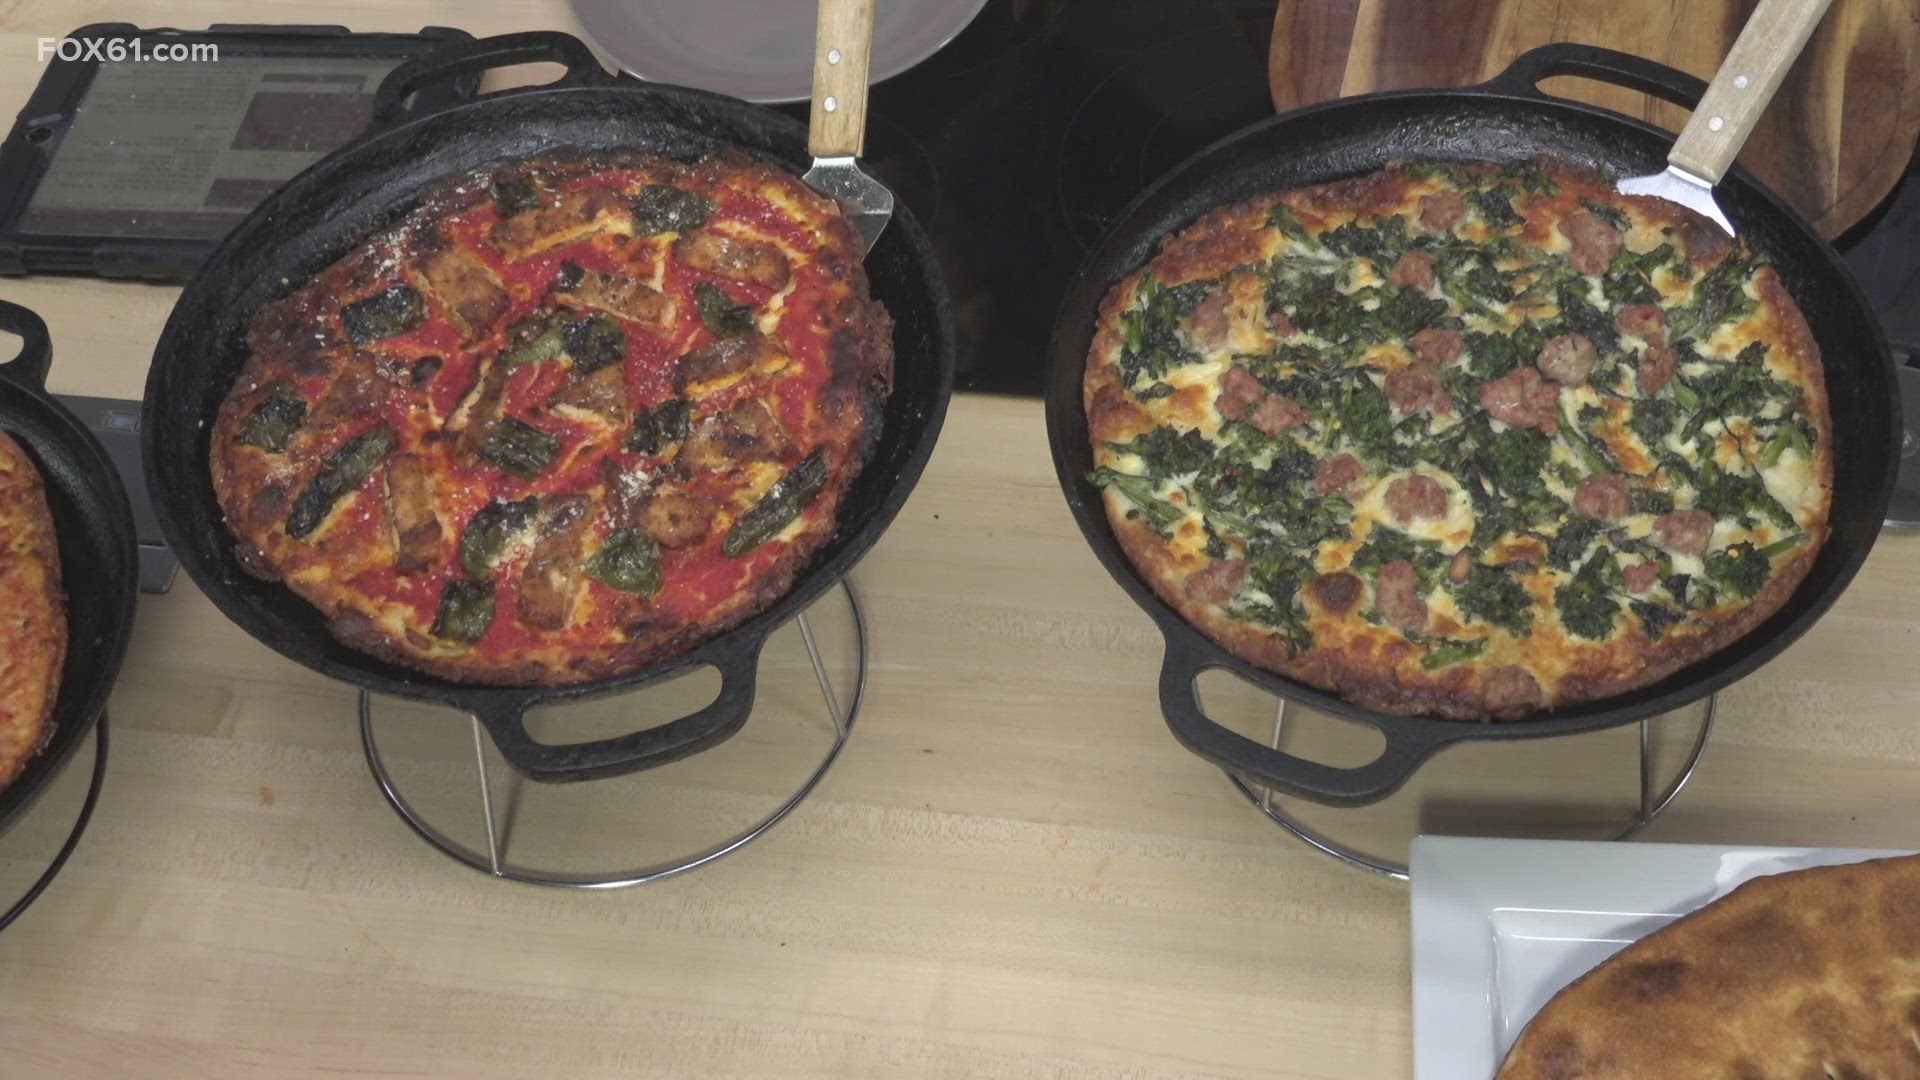 Chef Attilio Marini from Cast Iron Kitchen shows us how to make pizza in the FOX61 Kitchen.